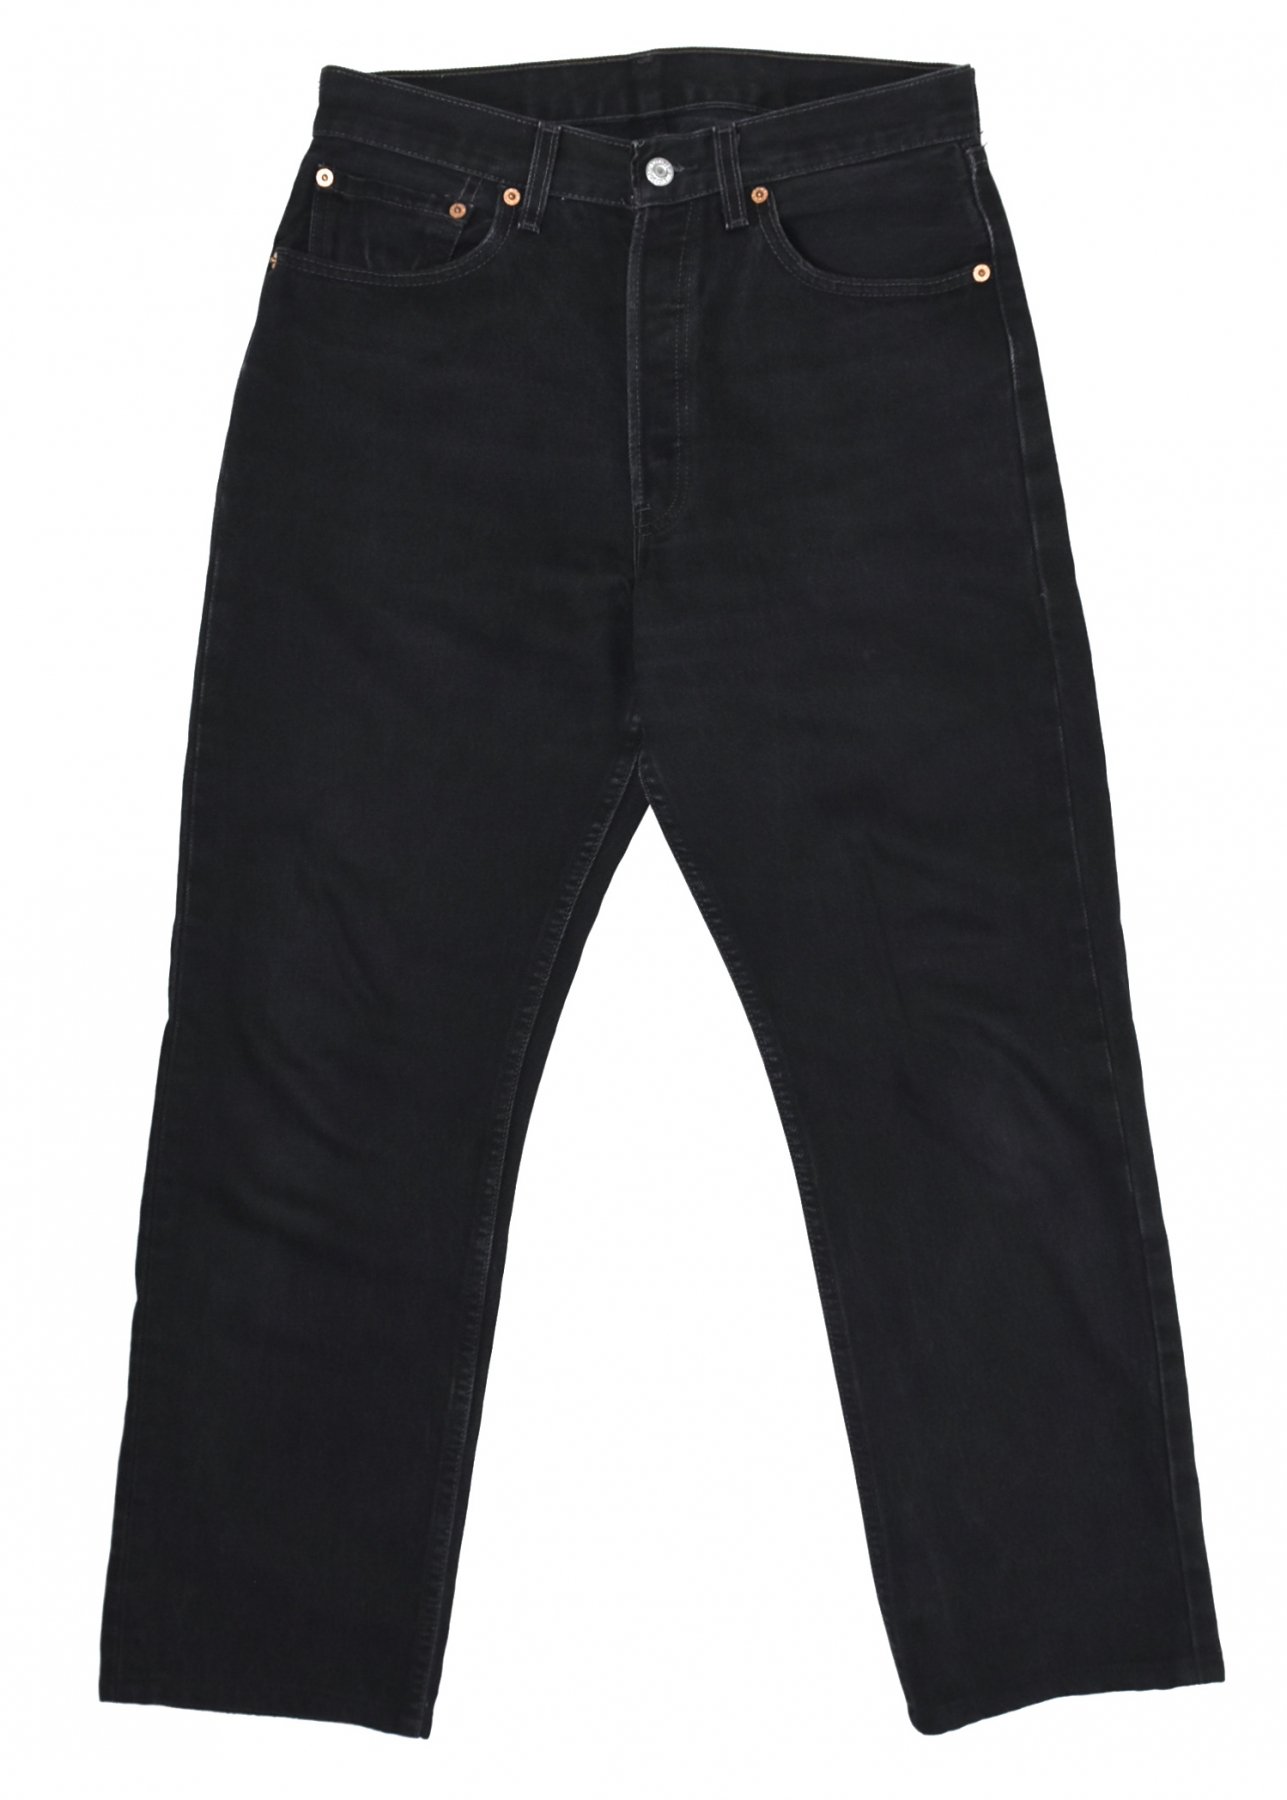 2001 LEVI'S 501 Black denim pants W31 L28 MADE IN USA R